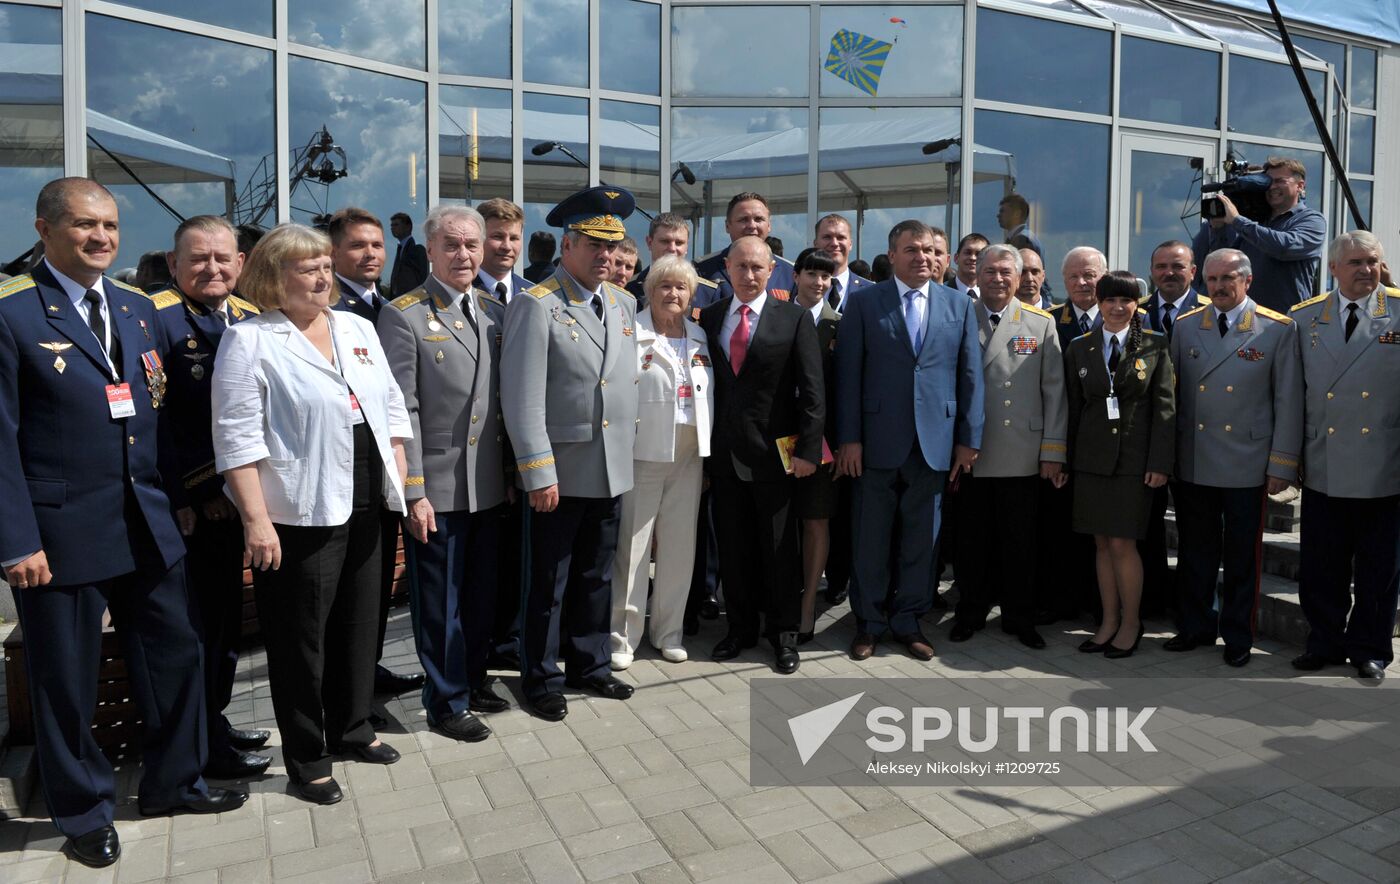 Putin at air show marking 100th anniversary of Russian Air Force